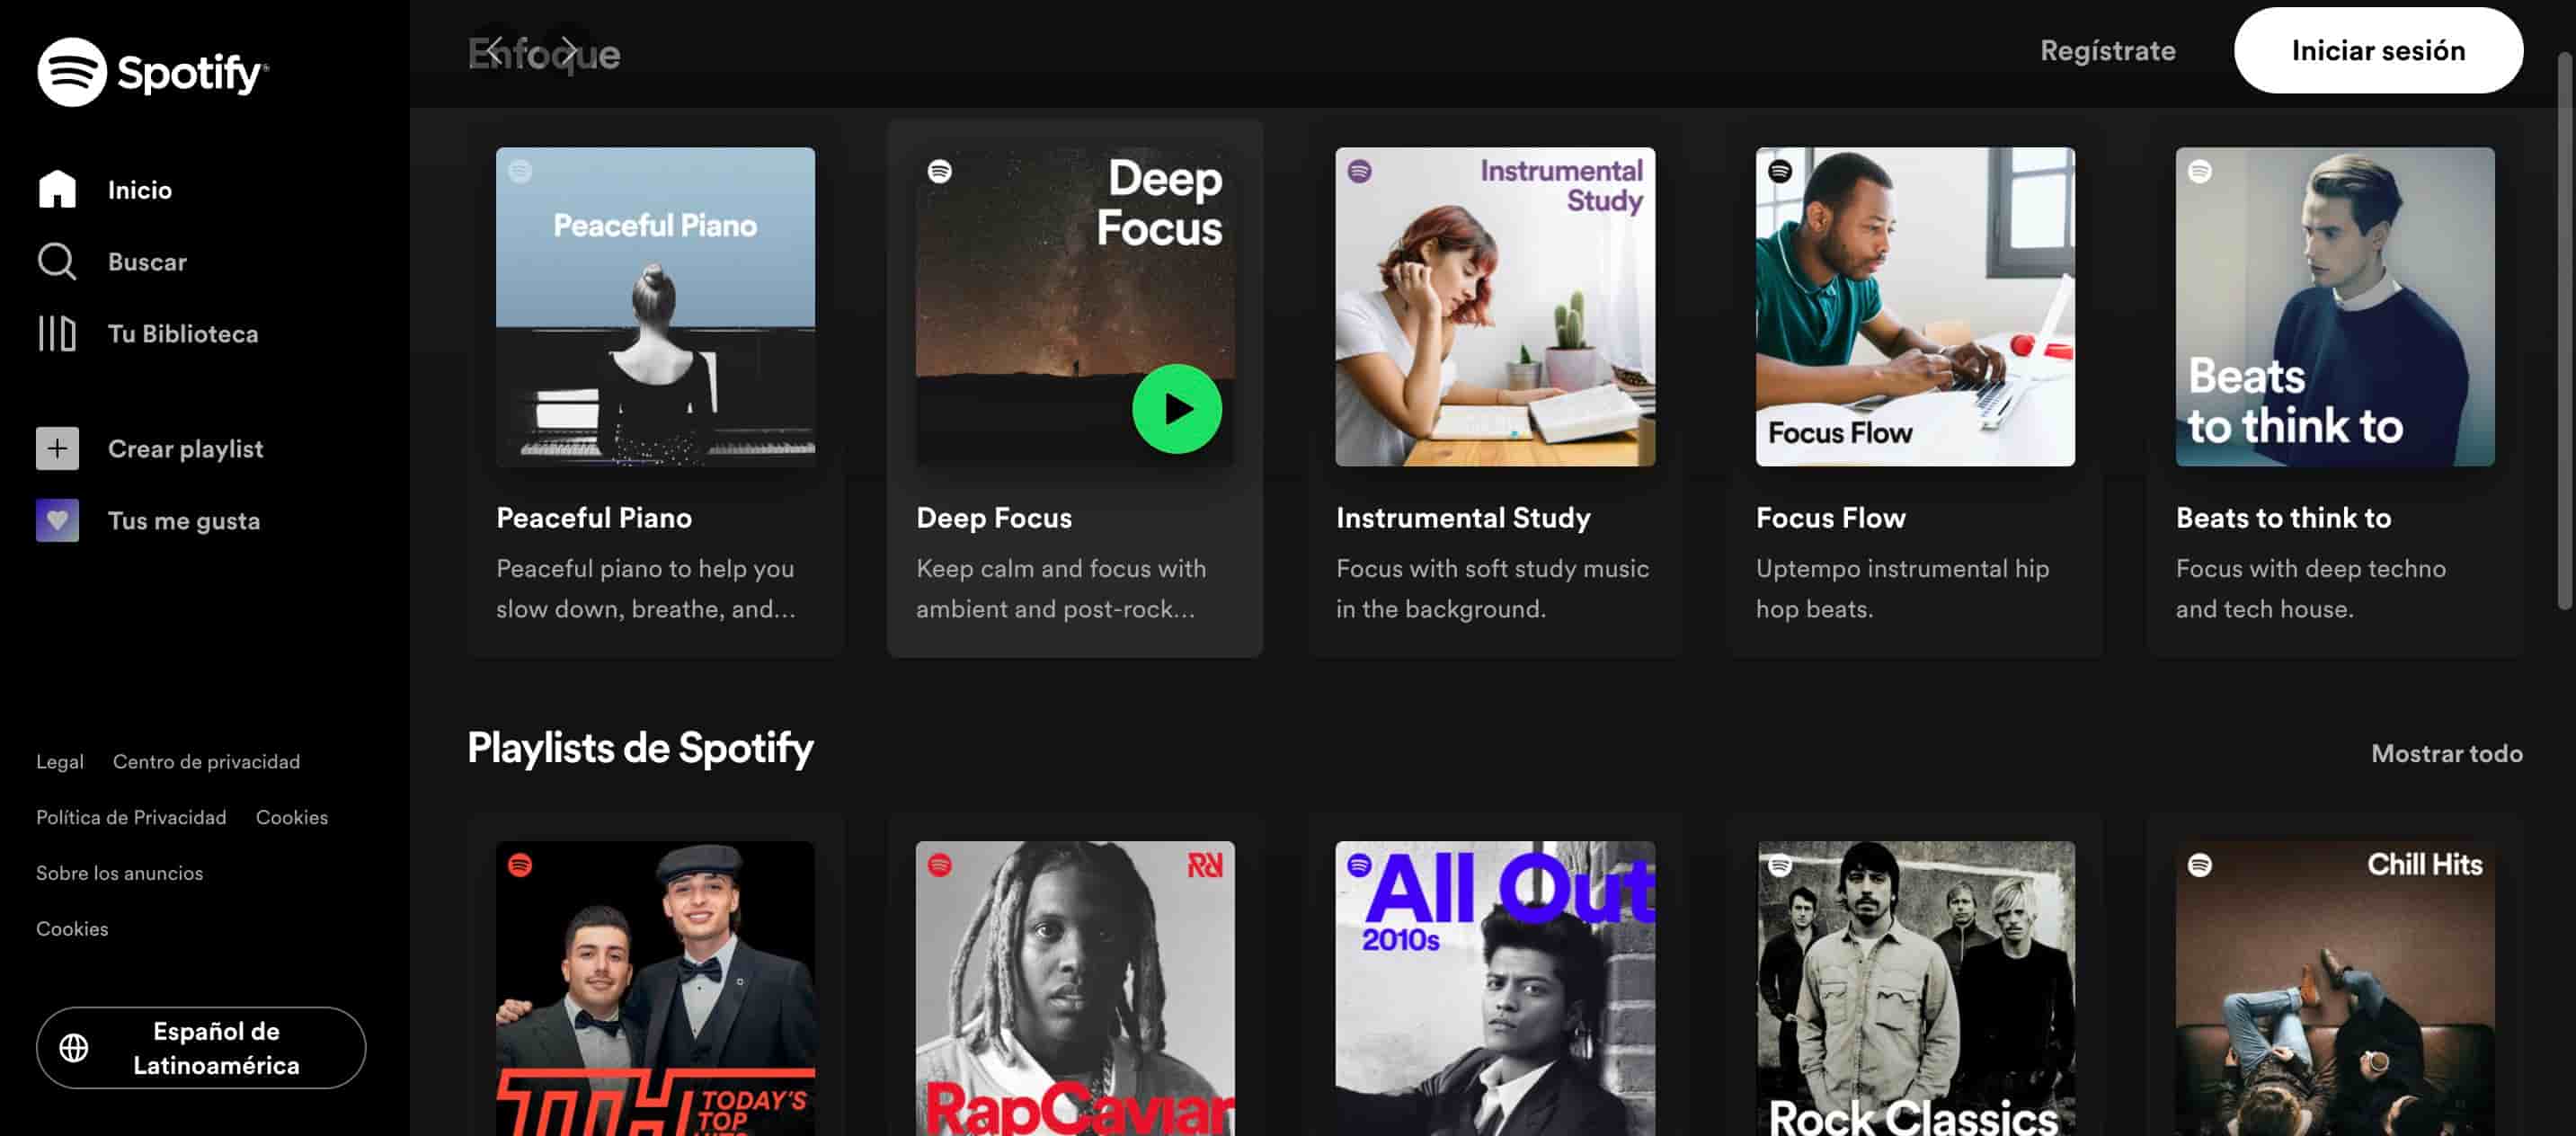 Ejemplo de single page application de Spotify